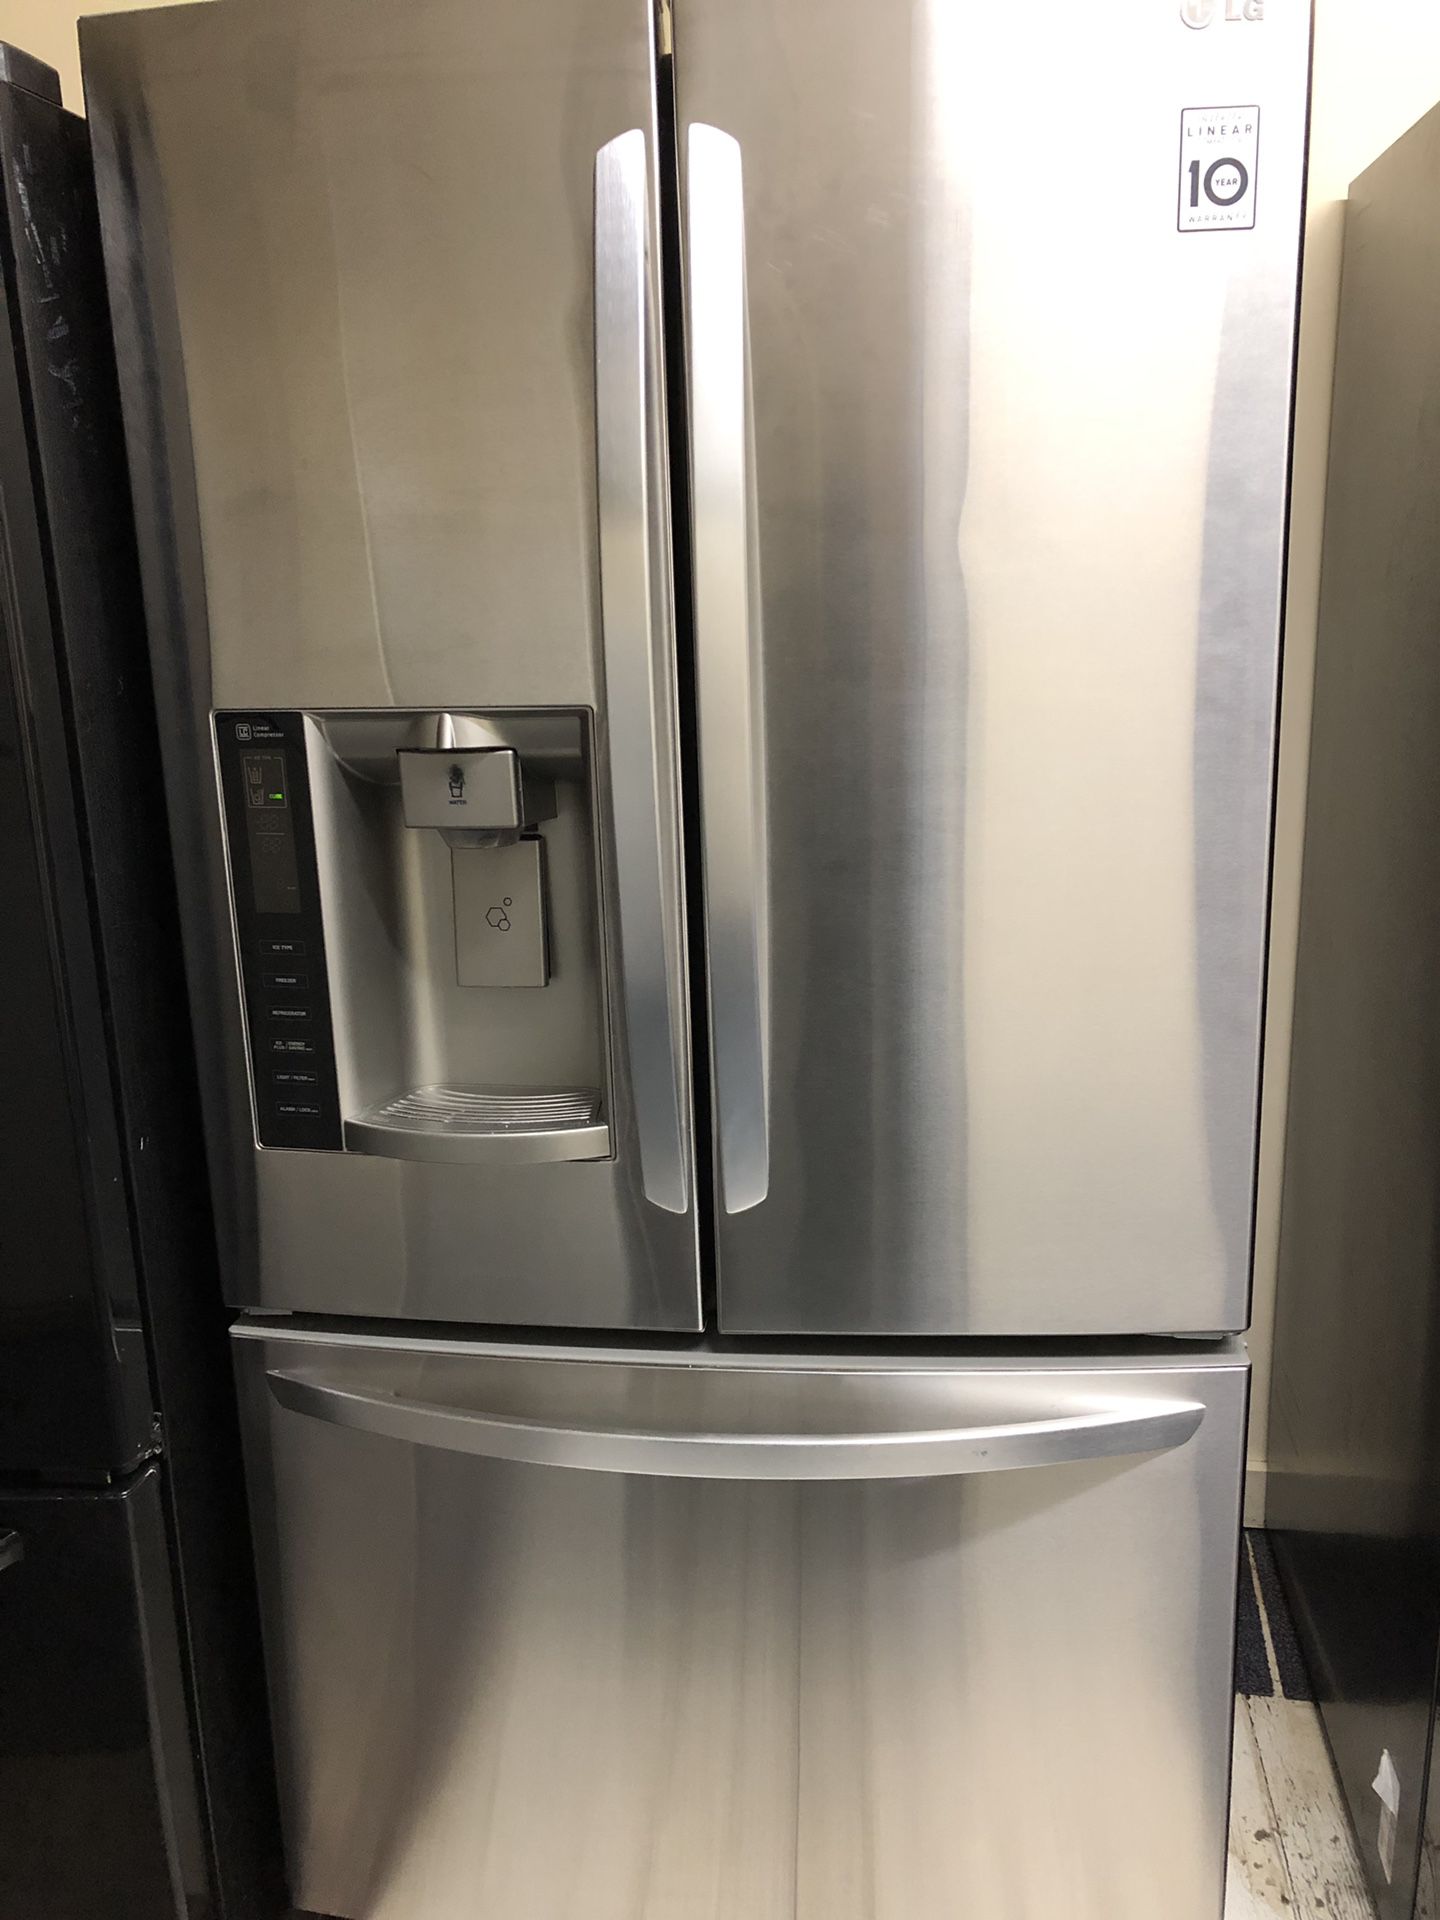 LG refrigerator 3 doors